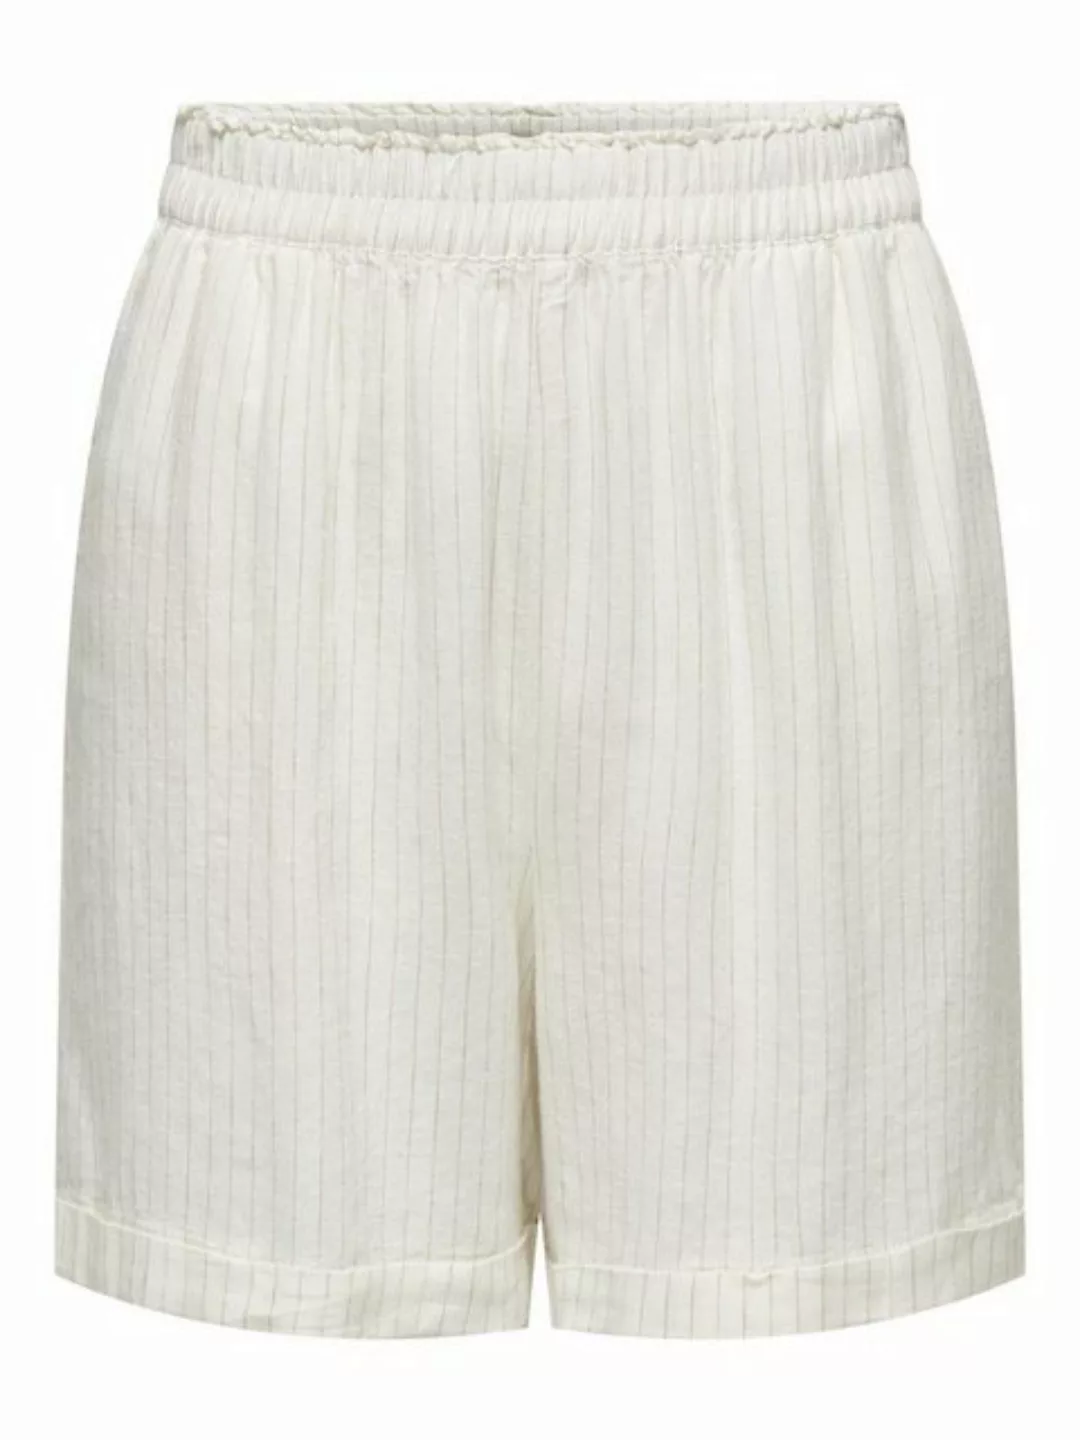 JACQUELINE de YONG Shorts Kurze Stoff Shorts Sommer Hot Pants 7551 in Weiß günstig online kaufen